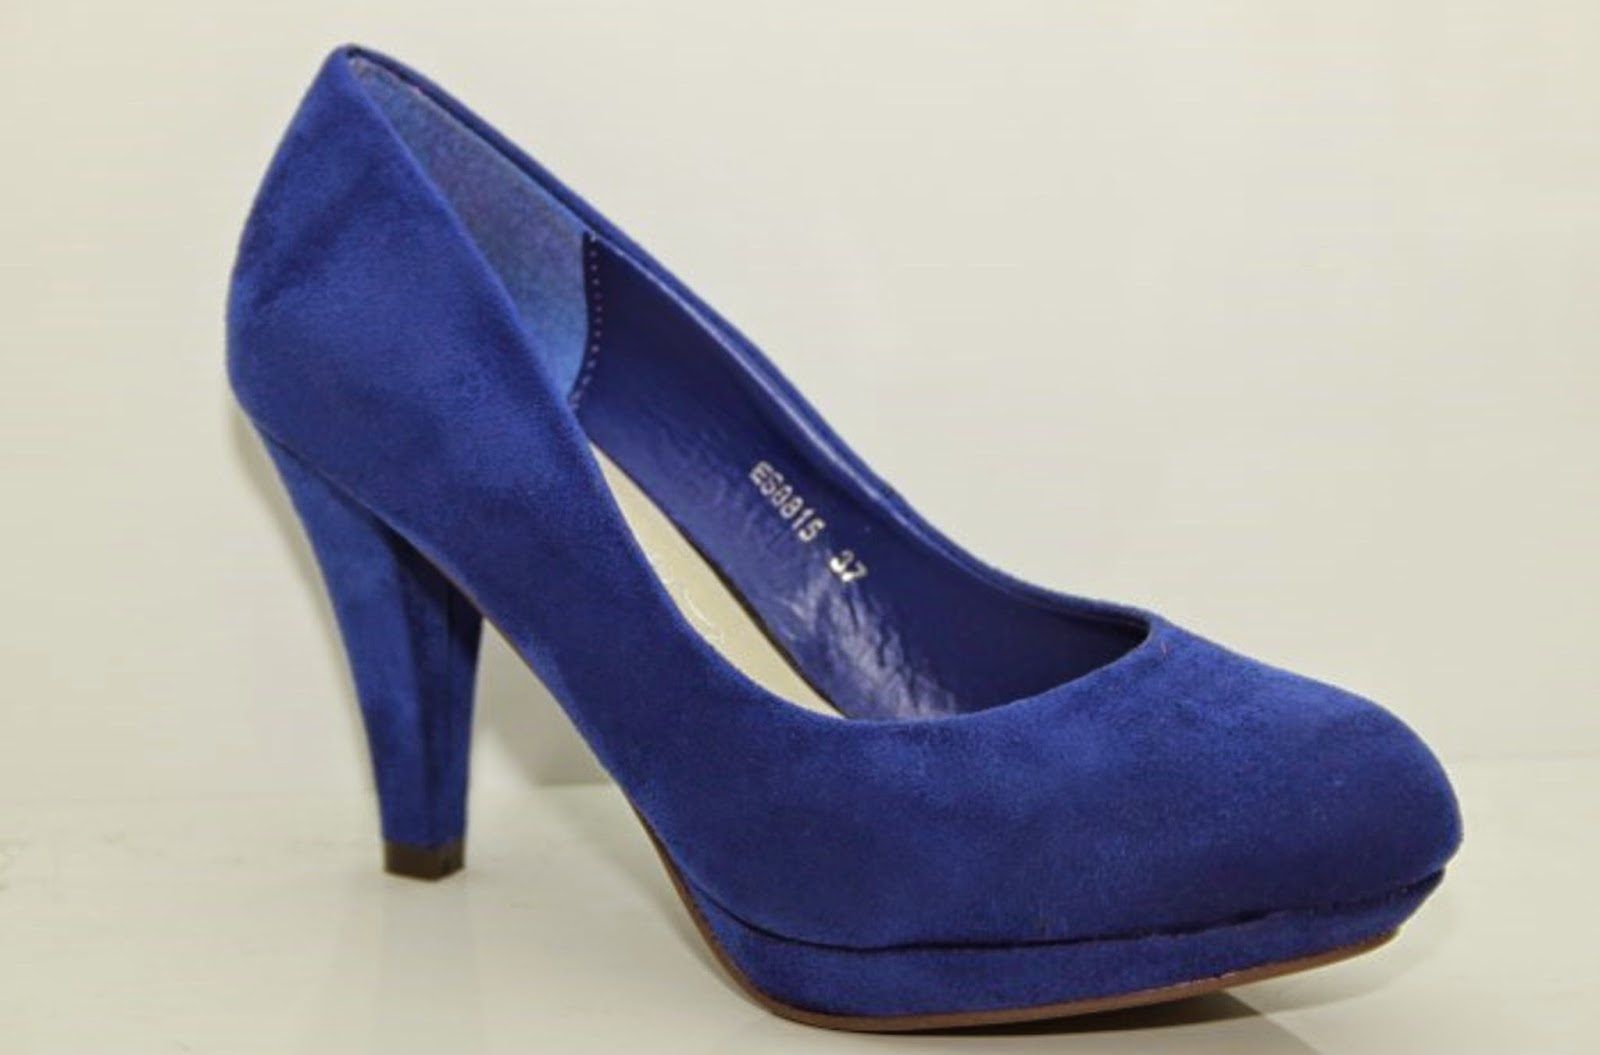 http://www.ebay.fr/itm/chaussures-femme-escarpins-vert-bleu-marron-taupe-noir-rouge-36-37-38-39-40-41-/301472806726?ssPageName=STRK:MESE:IT